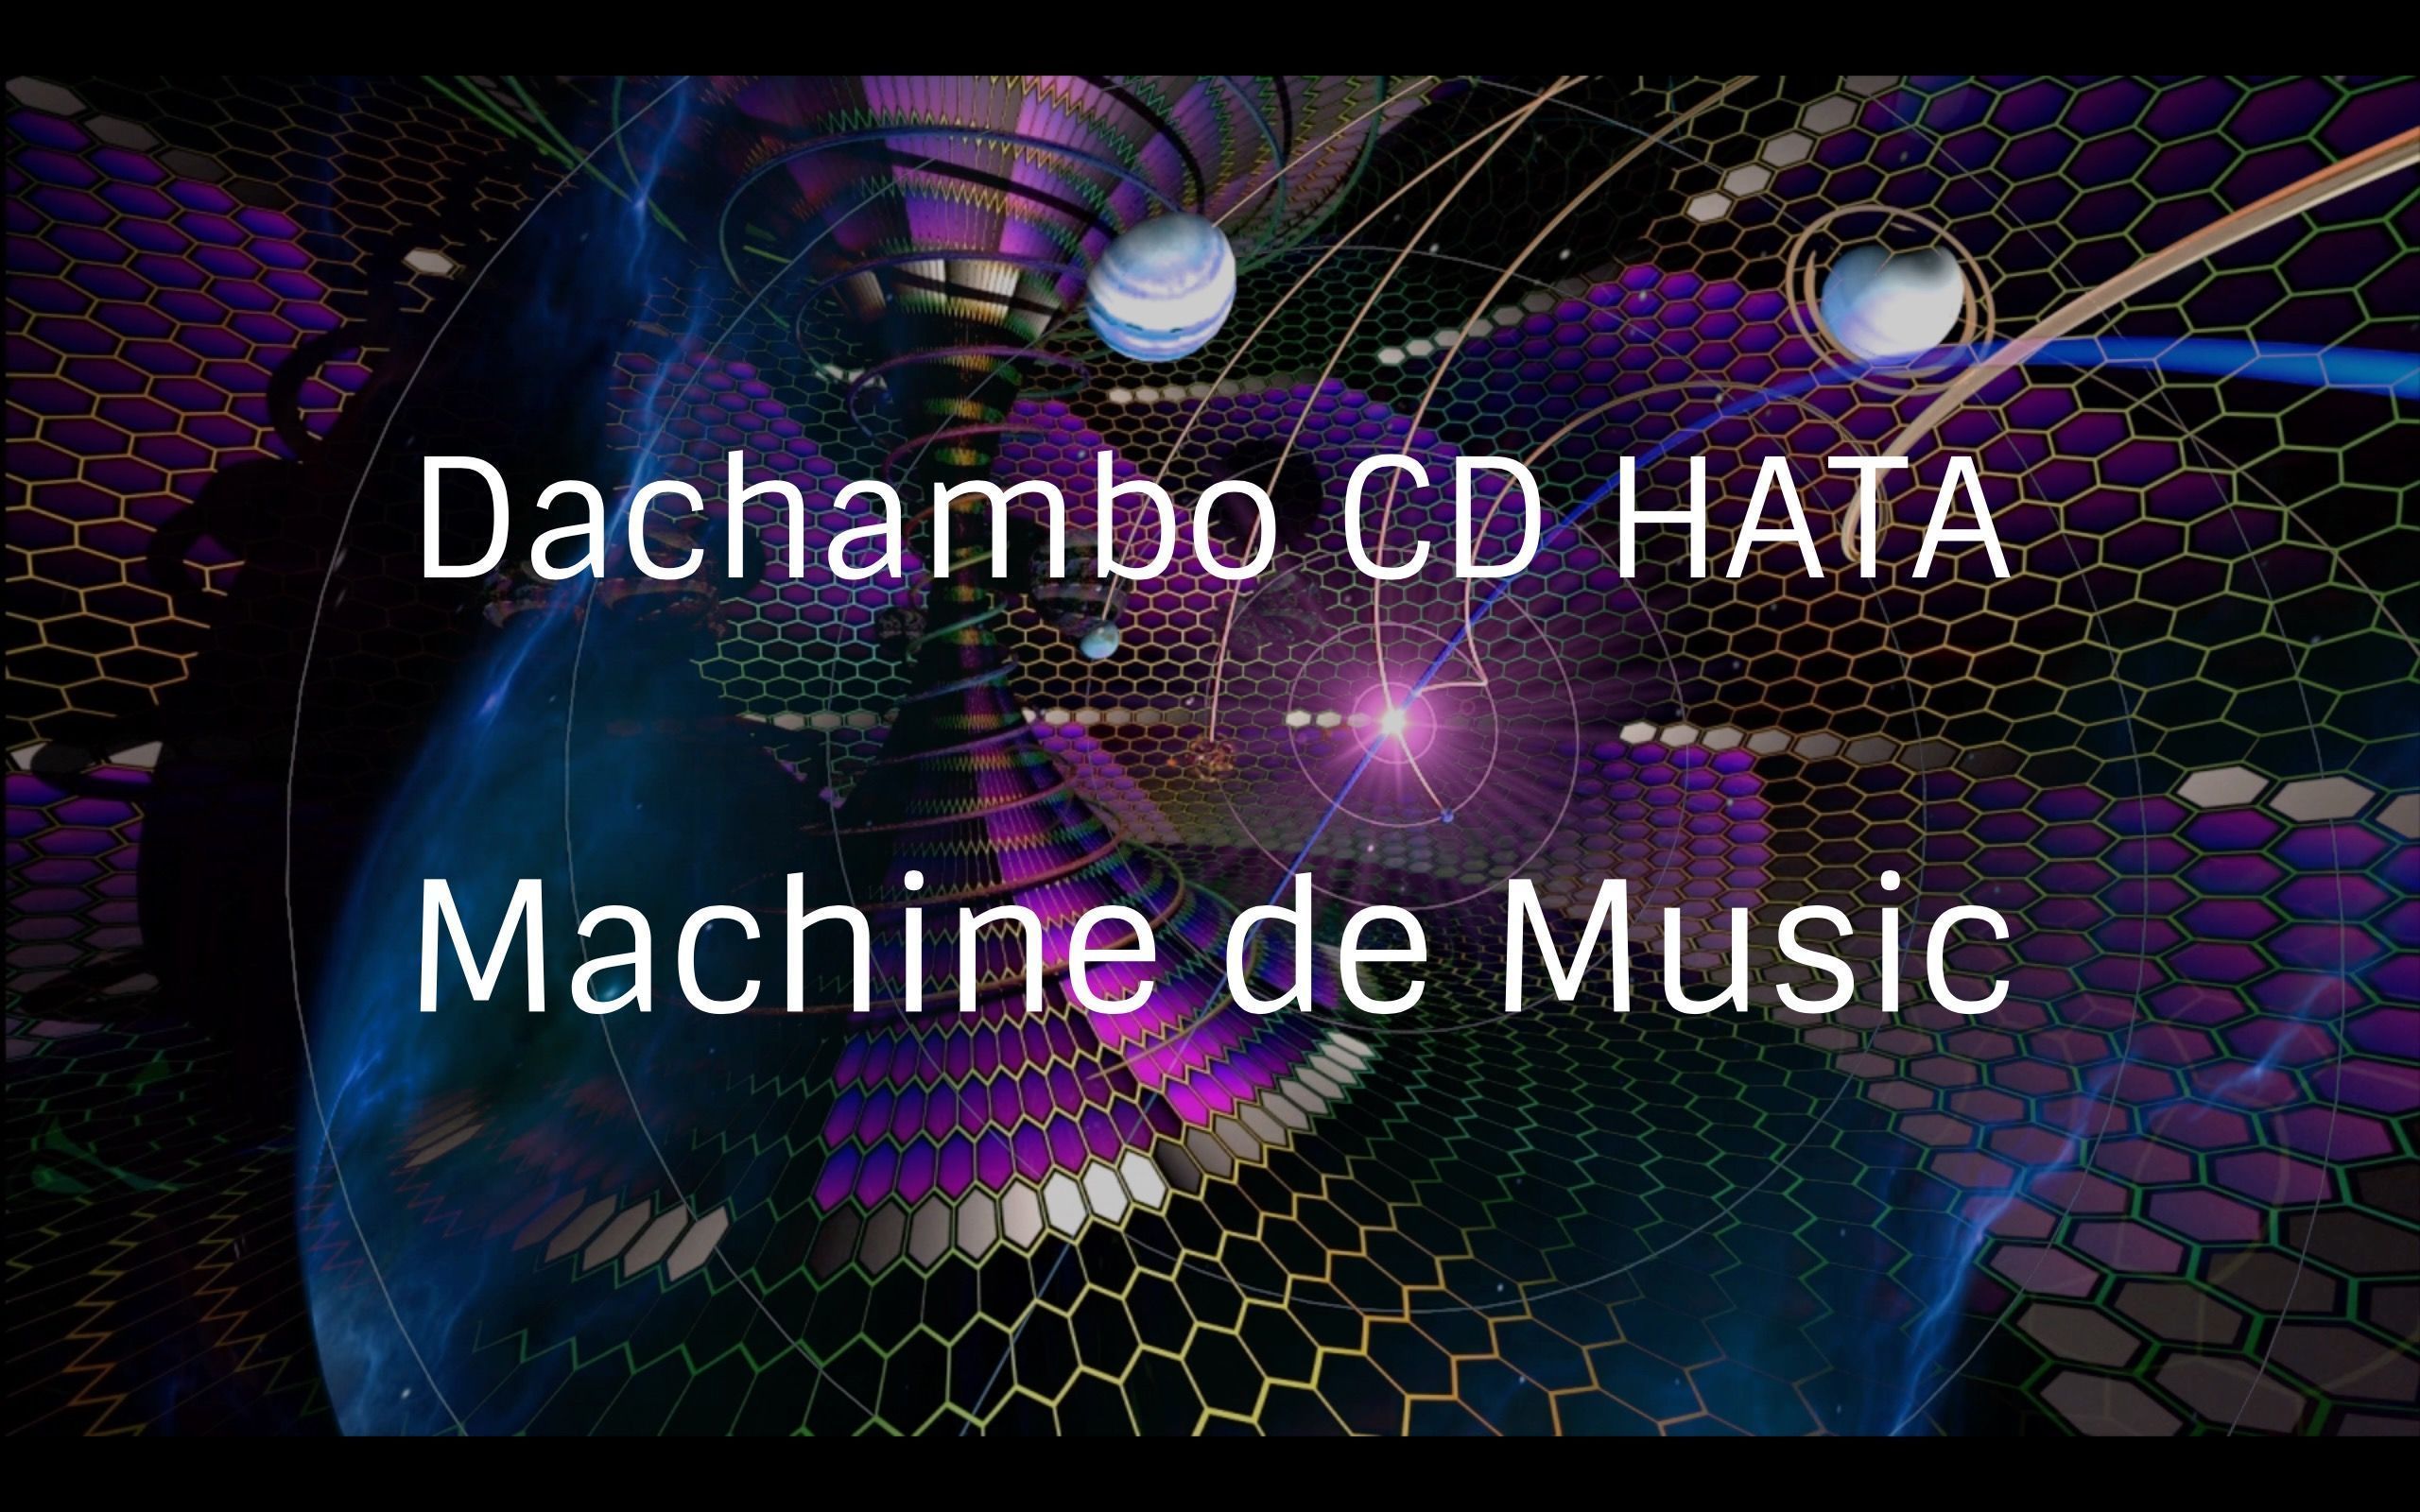 Dachambo CD HATAのMachine de Music 
コラムVol.43 
BAIS MSO & EarthQuaker Devices